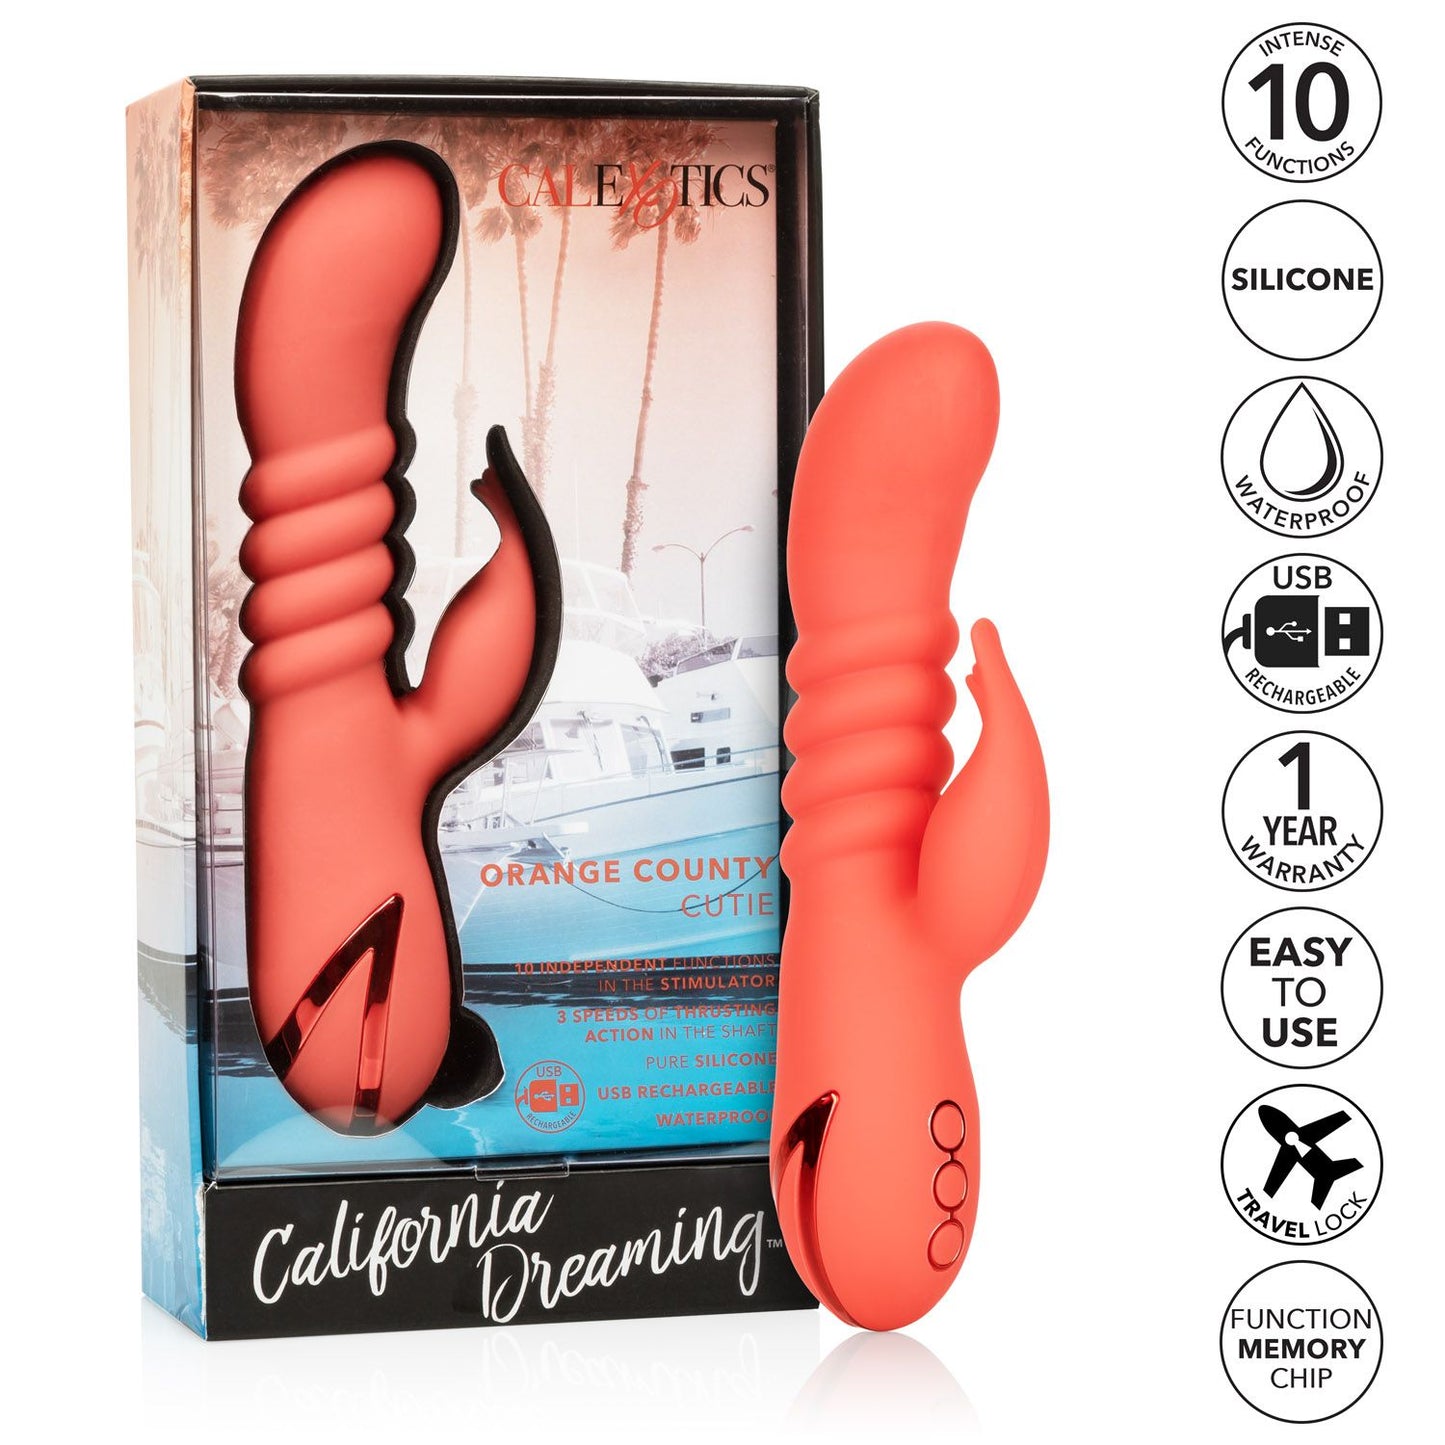 California Dreaming Orange County Cutie | are best clit vibrators